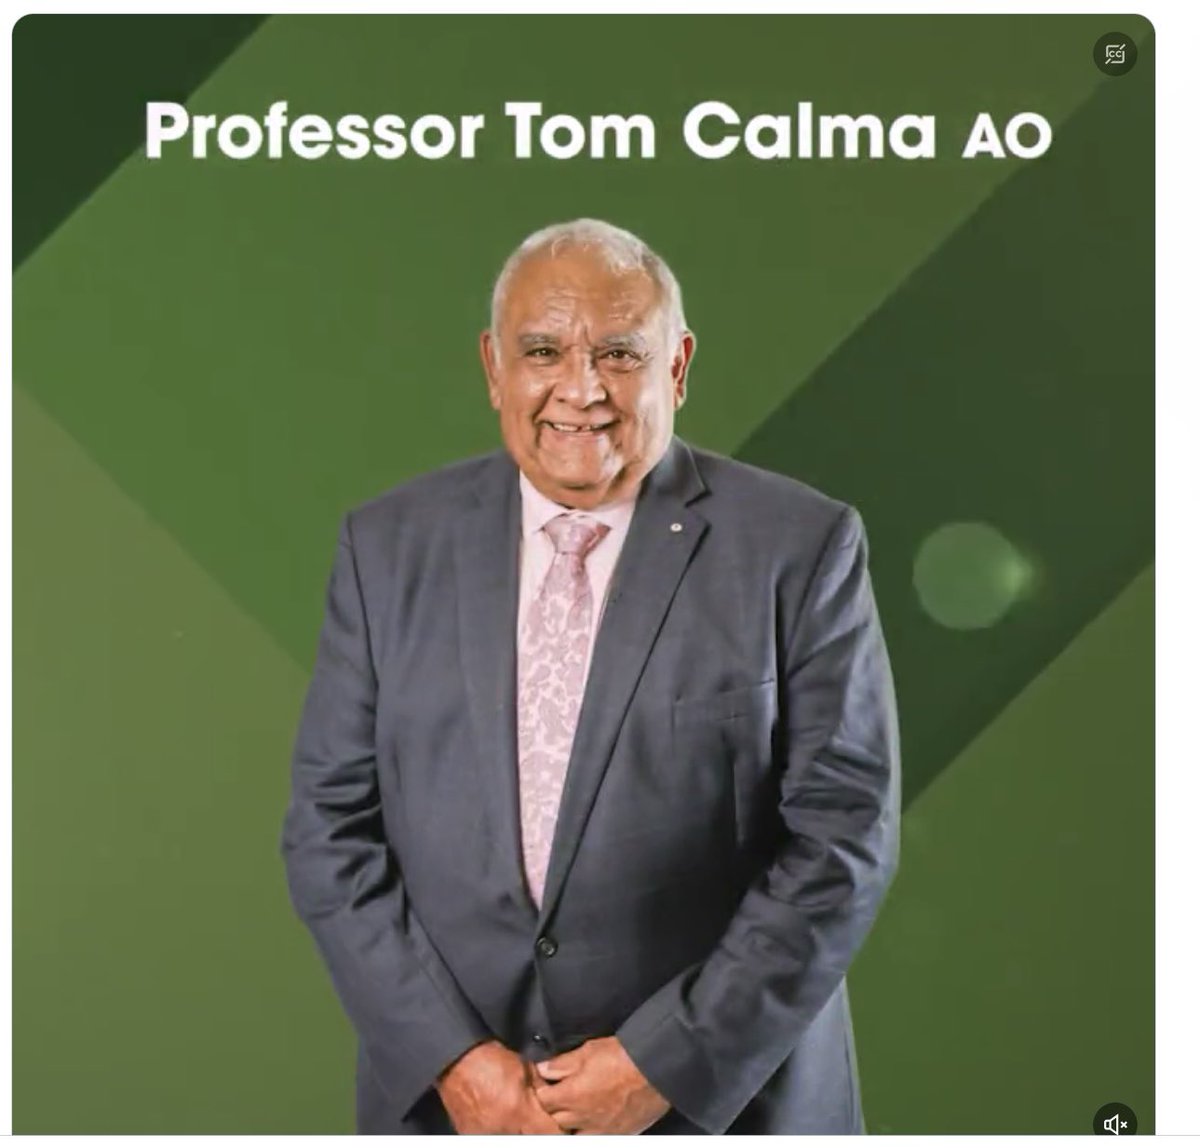 Congratulations to our #closethegap founder 

Senior Australian of the Year for 2023, Professor Tom Calma AO!

@June_Oscar @briscoe_karl #AustralianoftheYear